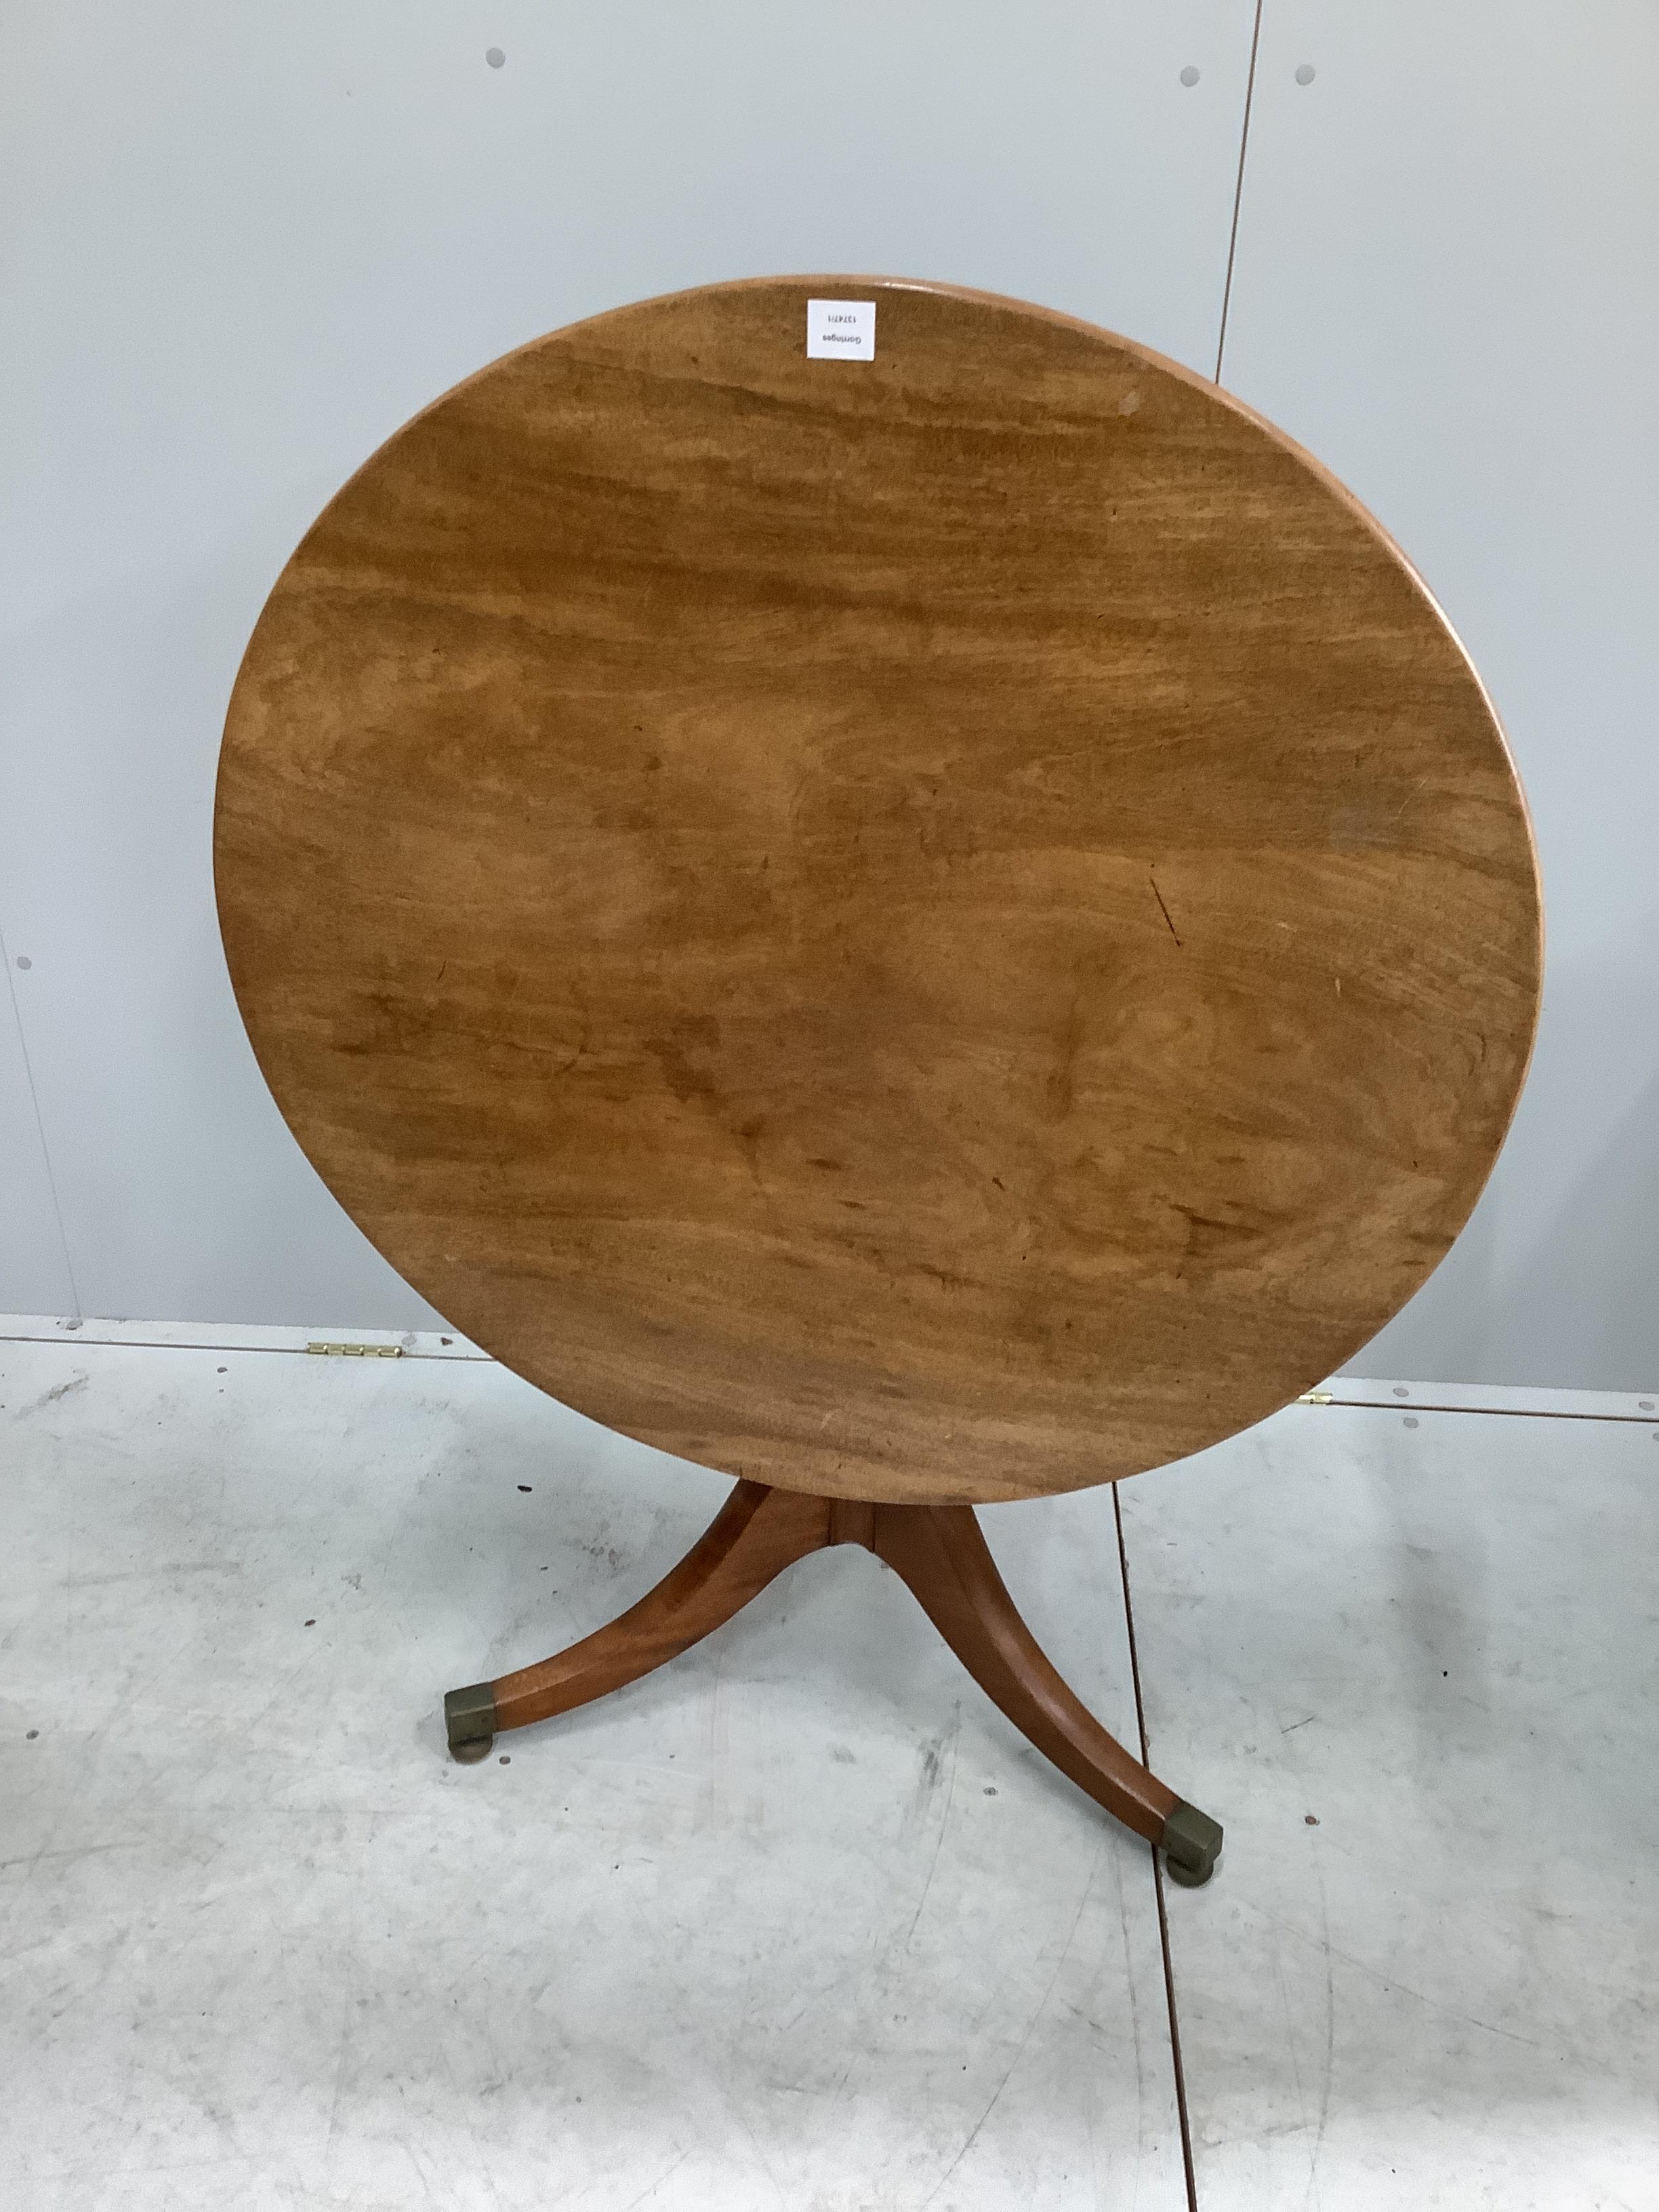 A Regency circular mahogany tilt top tea table, diameter 92cm, height 71cm - Image 2 of 2